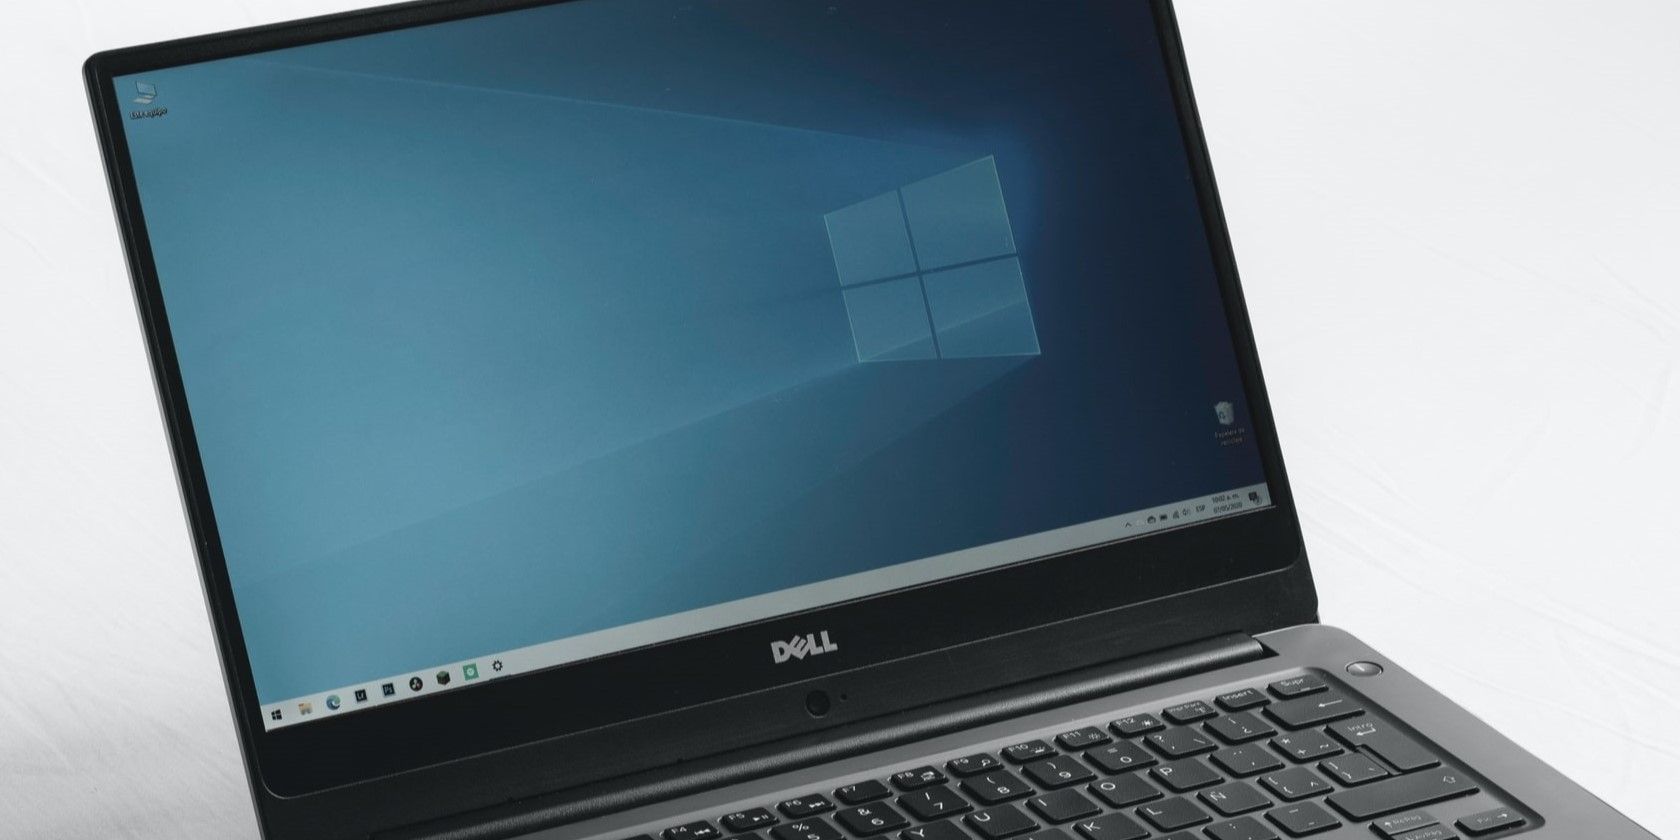 Windows 10 Laptop on a plain white surface